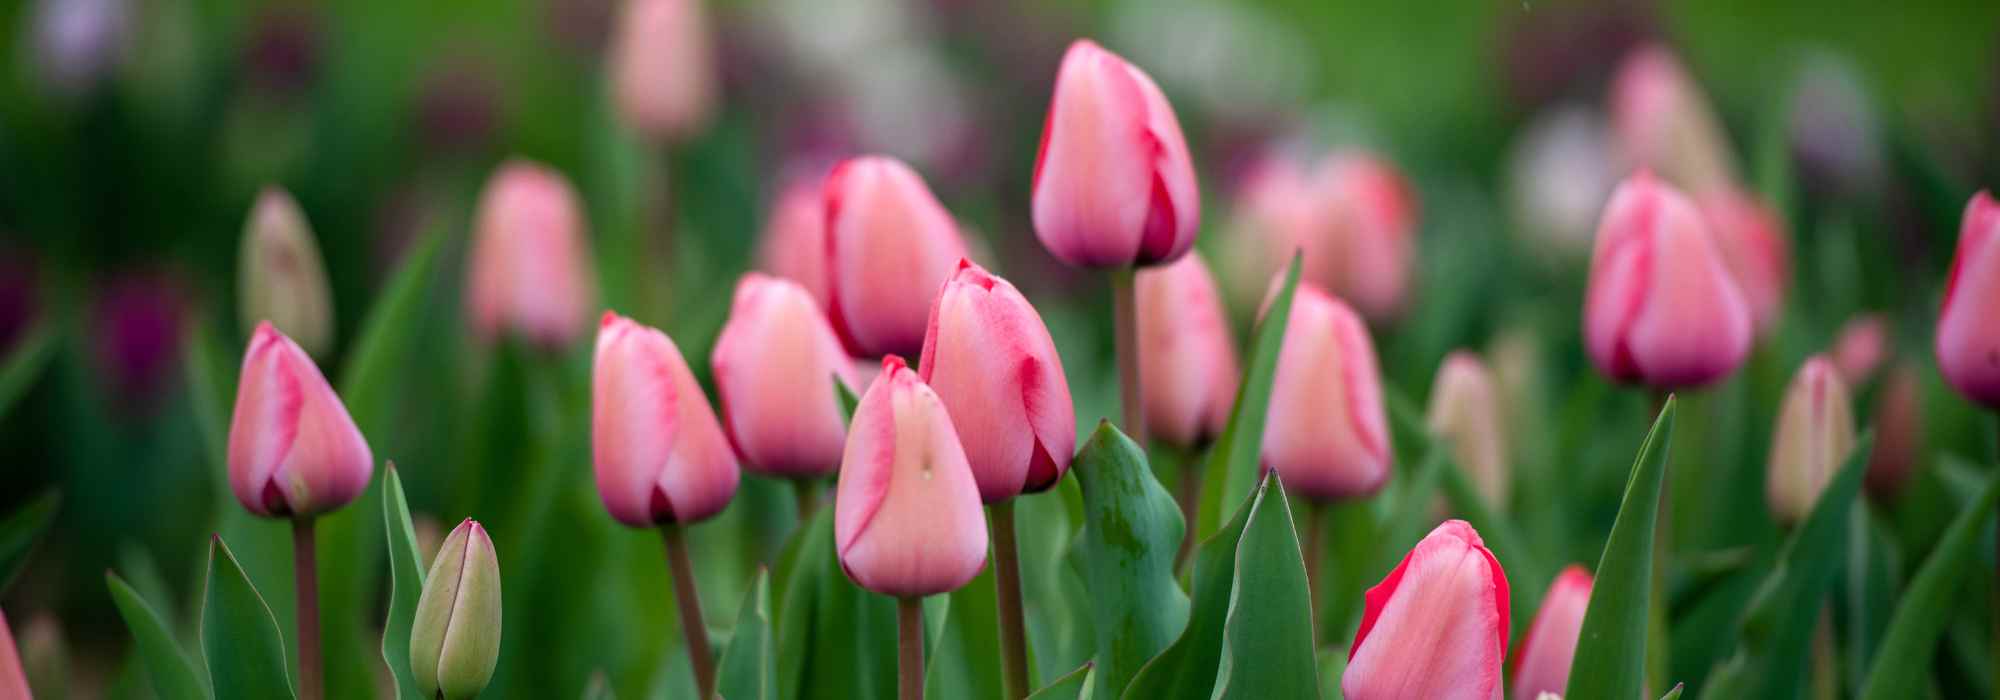 6 tulipes à fleurs roses